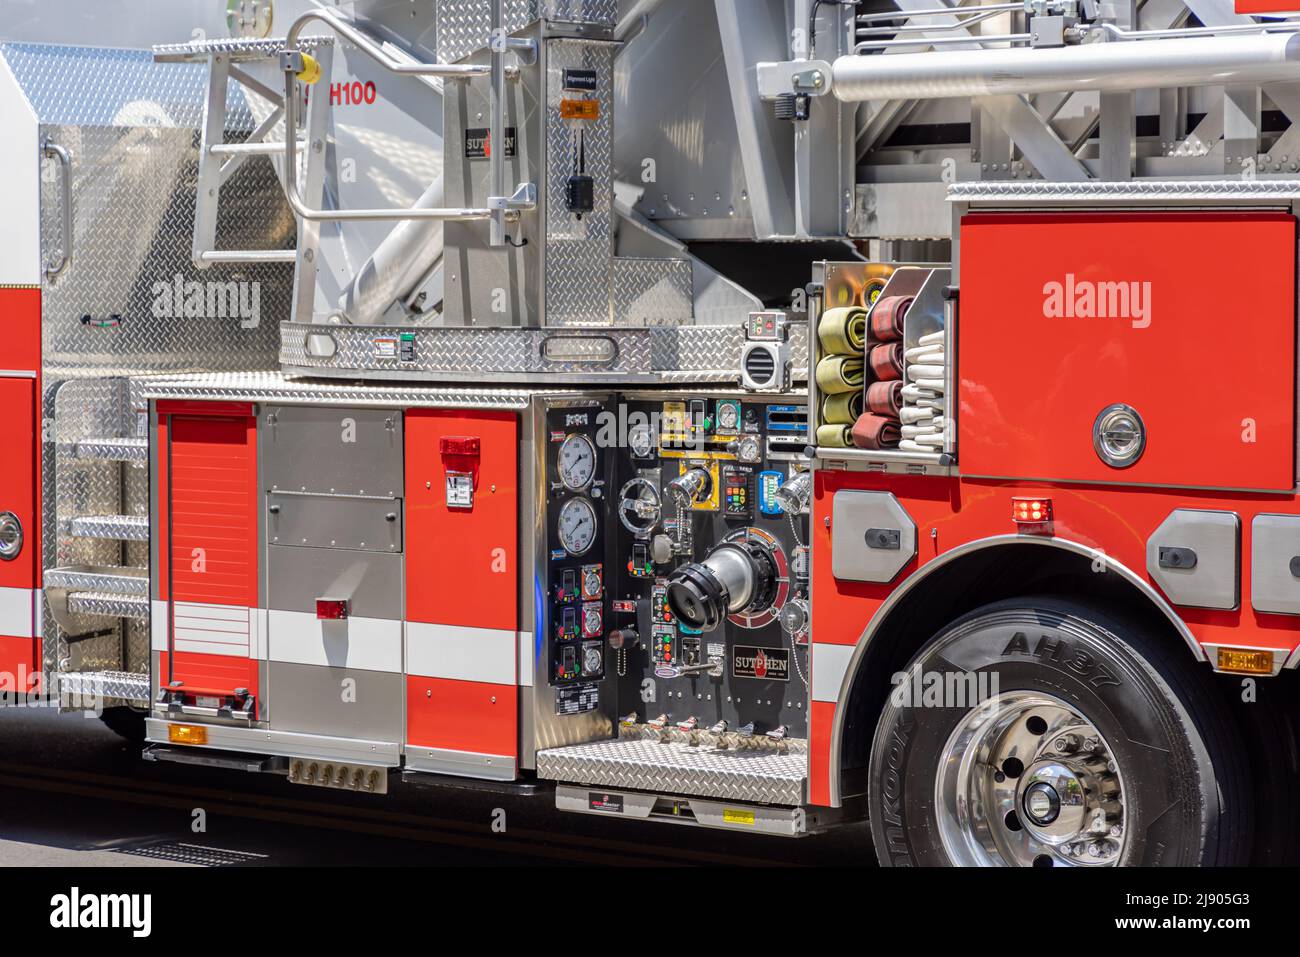 Orlando FL E5 Sutphen pumper Fire Apparatus Slide